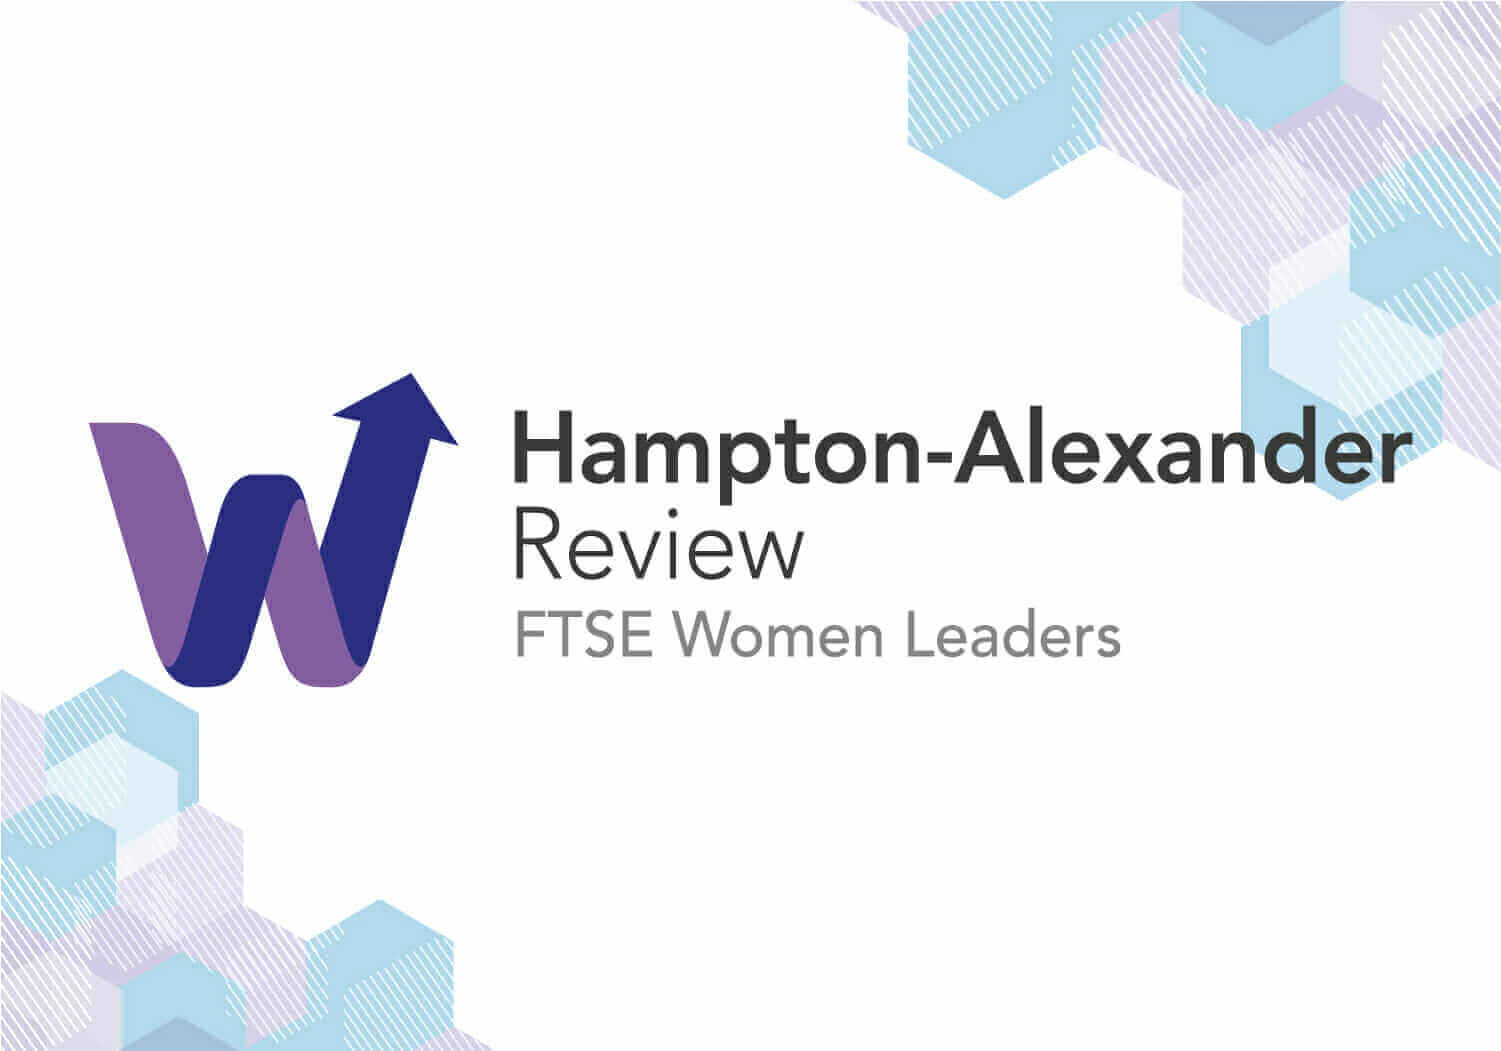 Hampton-Alexander Review 2020 Published